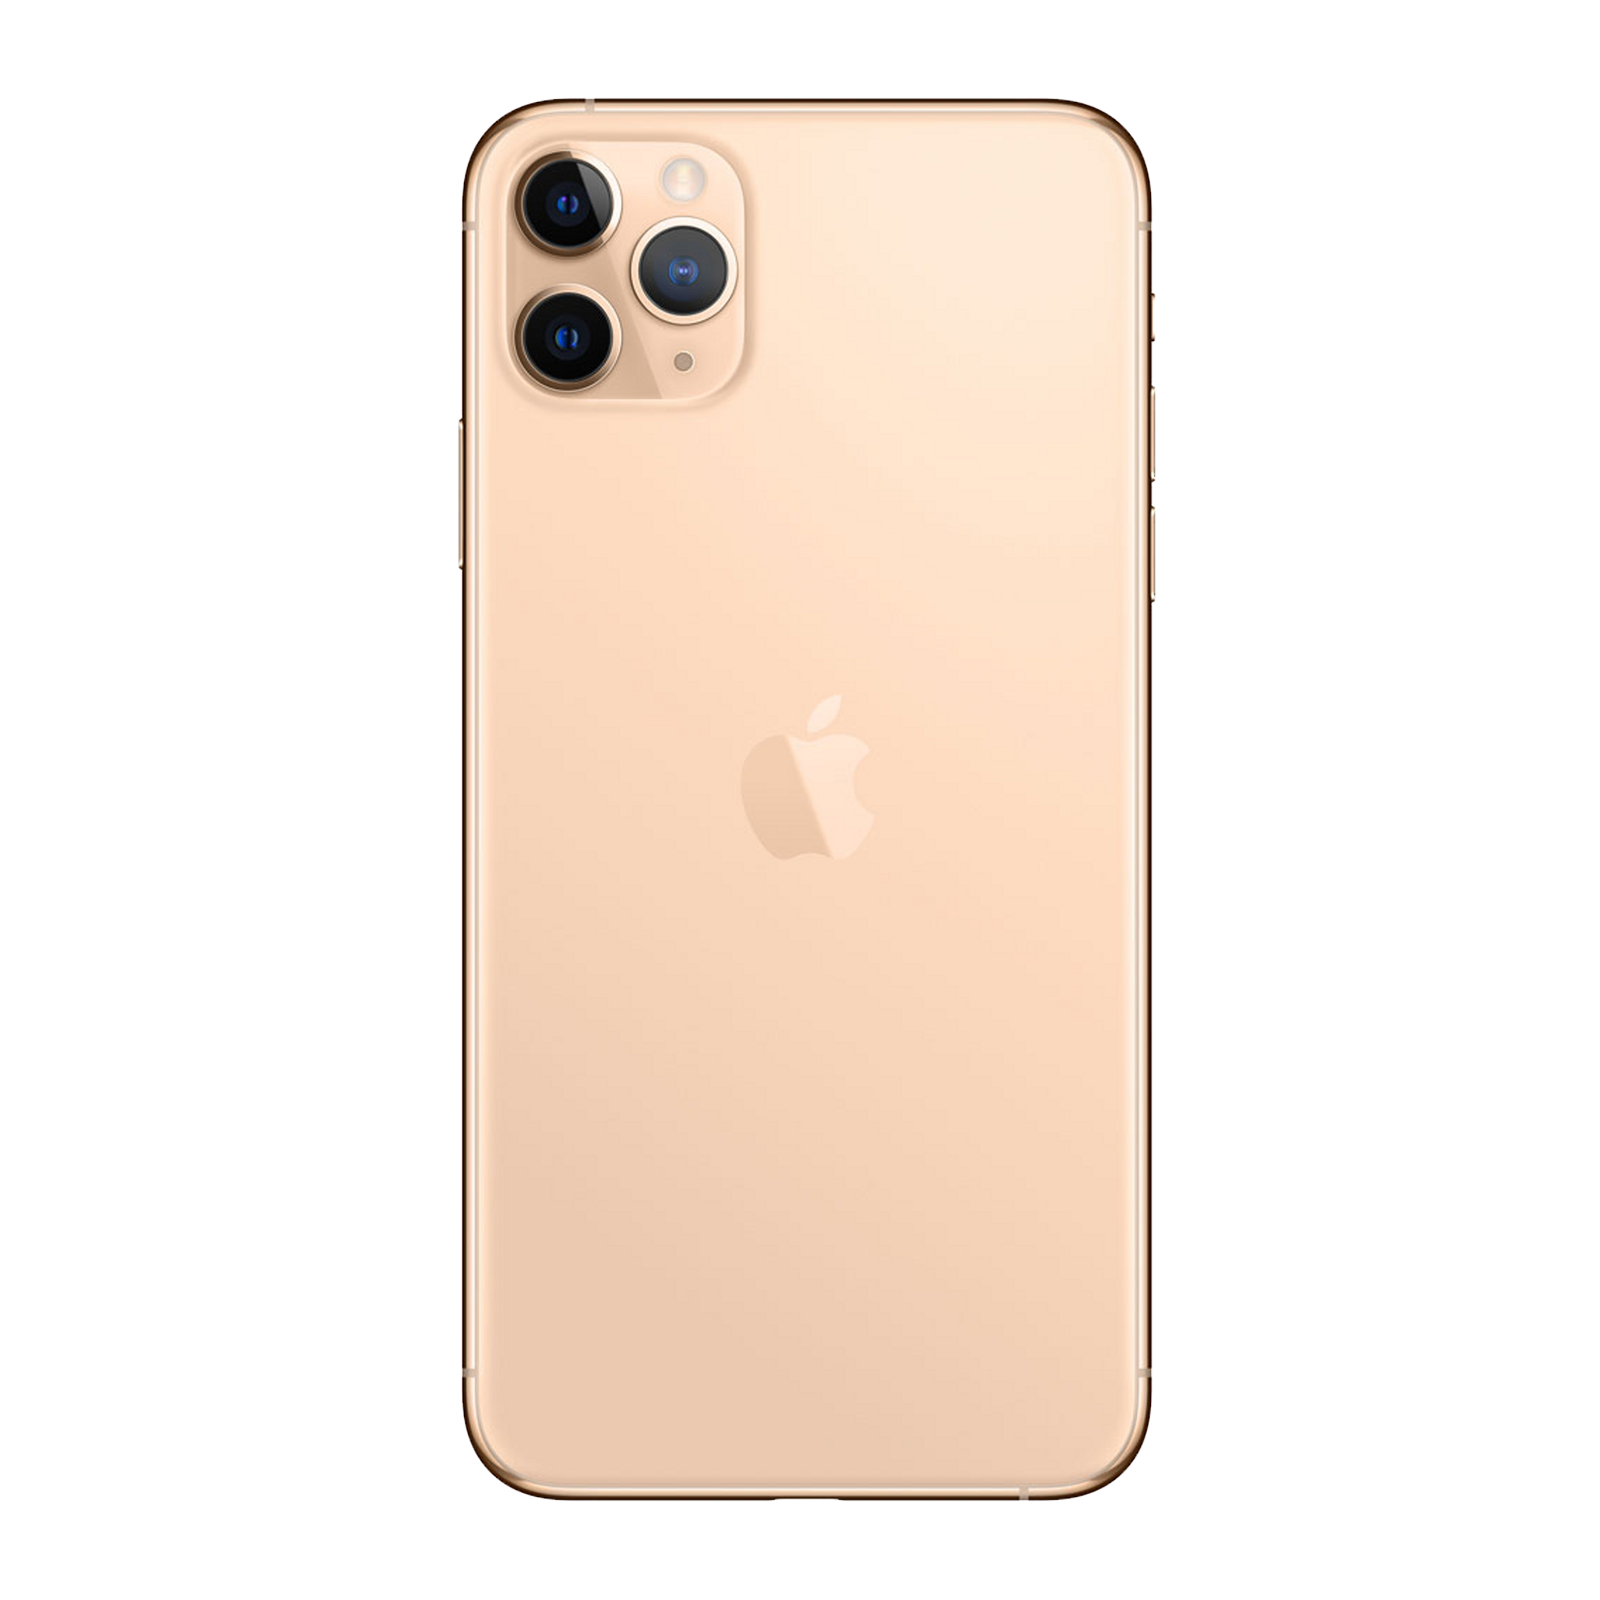 Apple iPhone 11 Pro Max 256GB Gold Good - Sprint